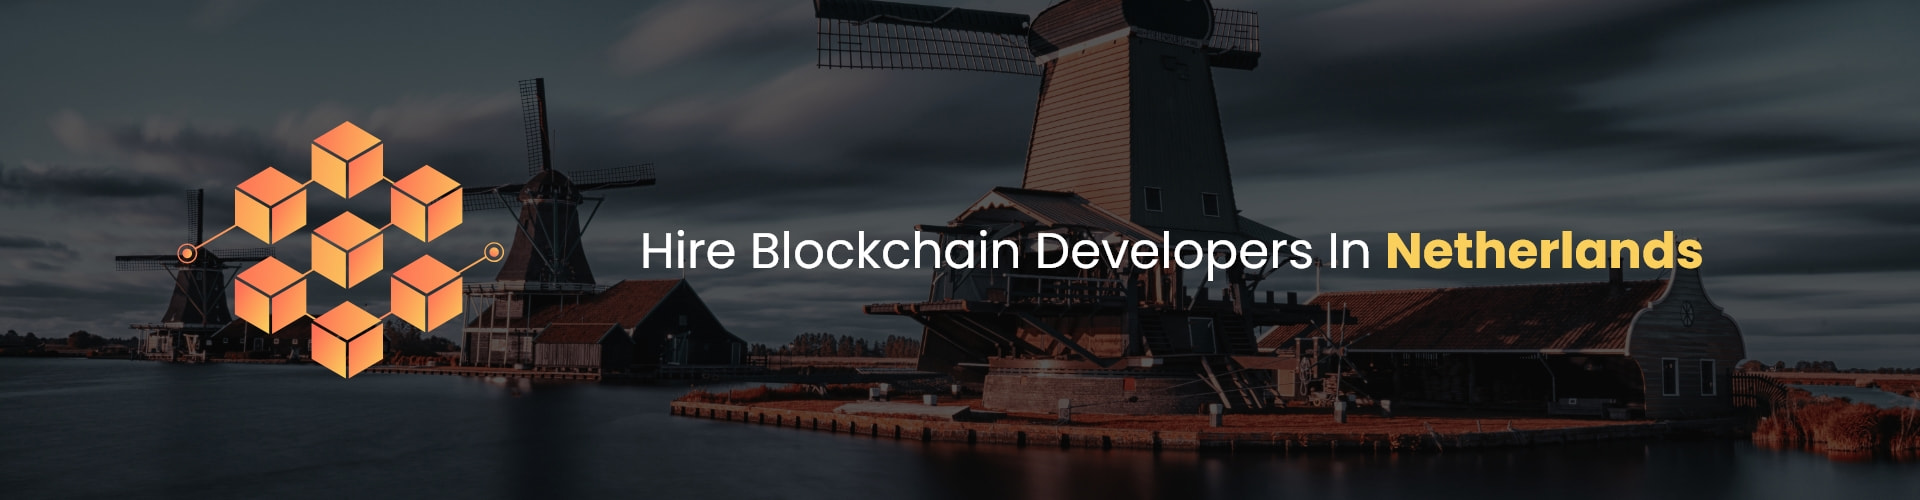 hire blockchain developers in netherlands